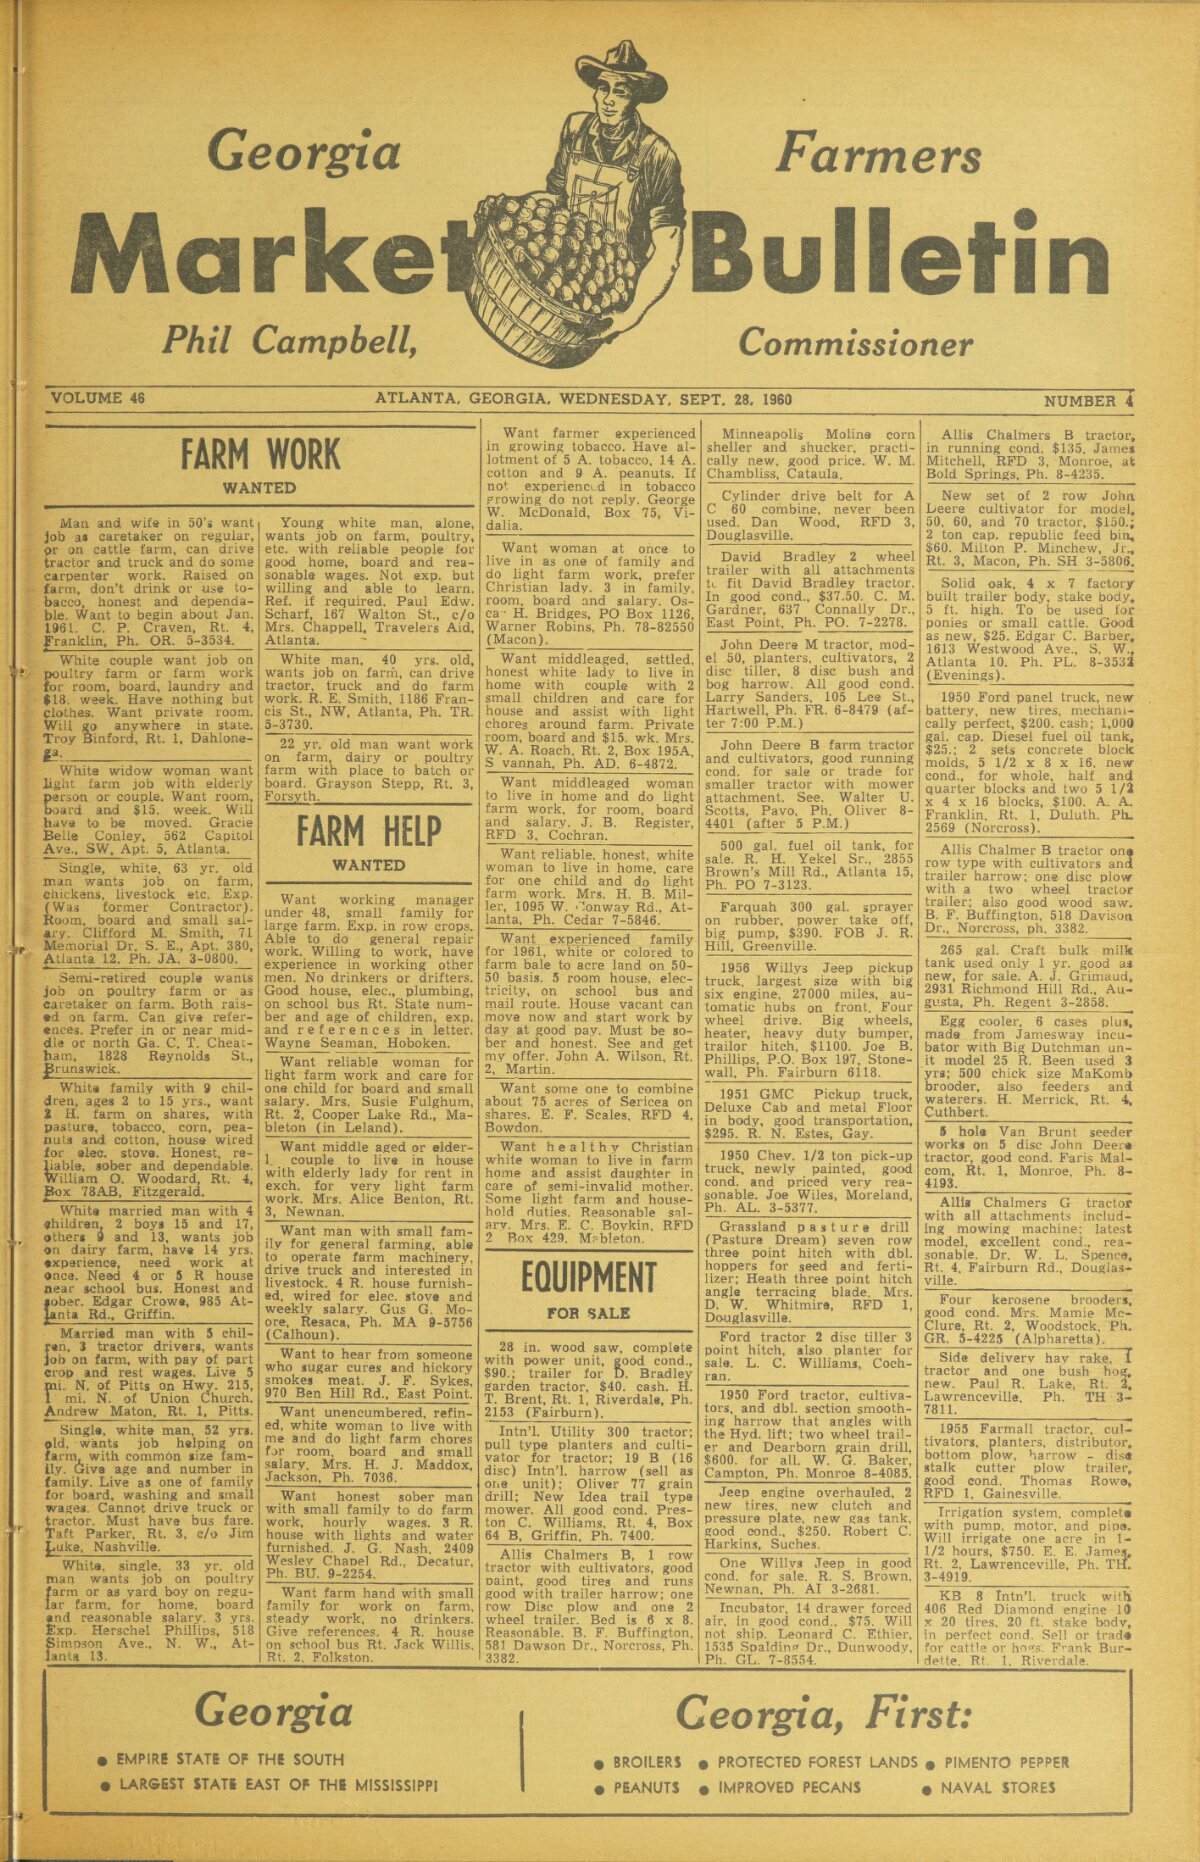 Farmers and consumers market bulletin, 1956 April 4 - Digital Library of  Georgia